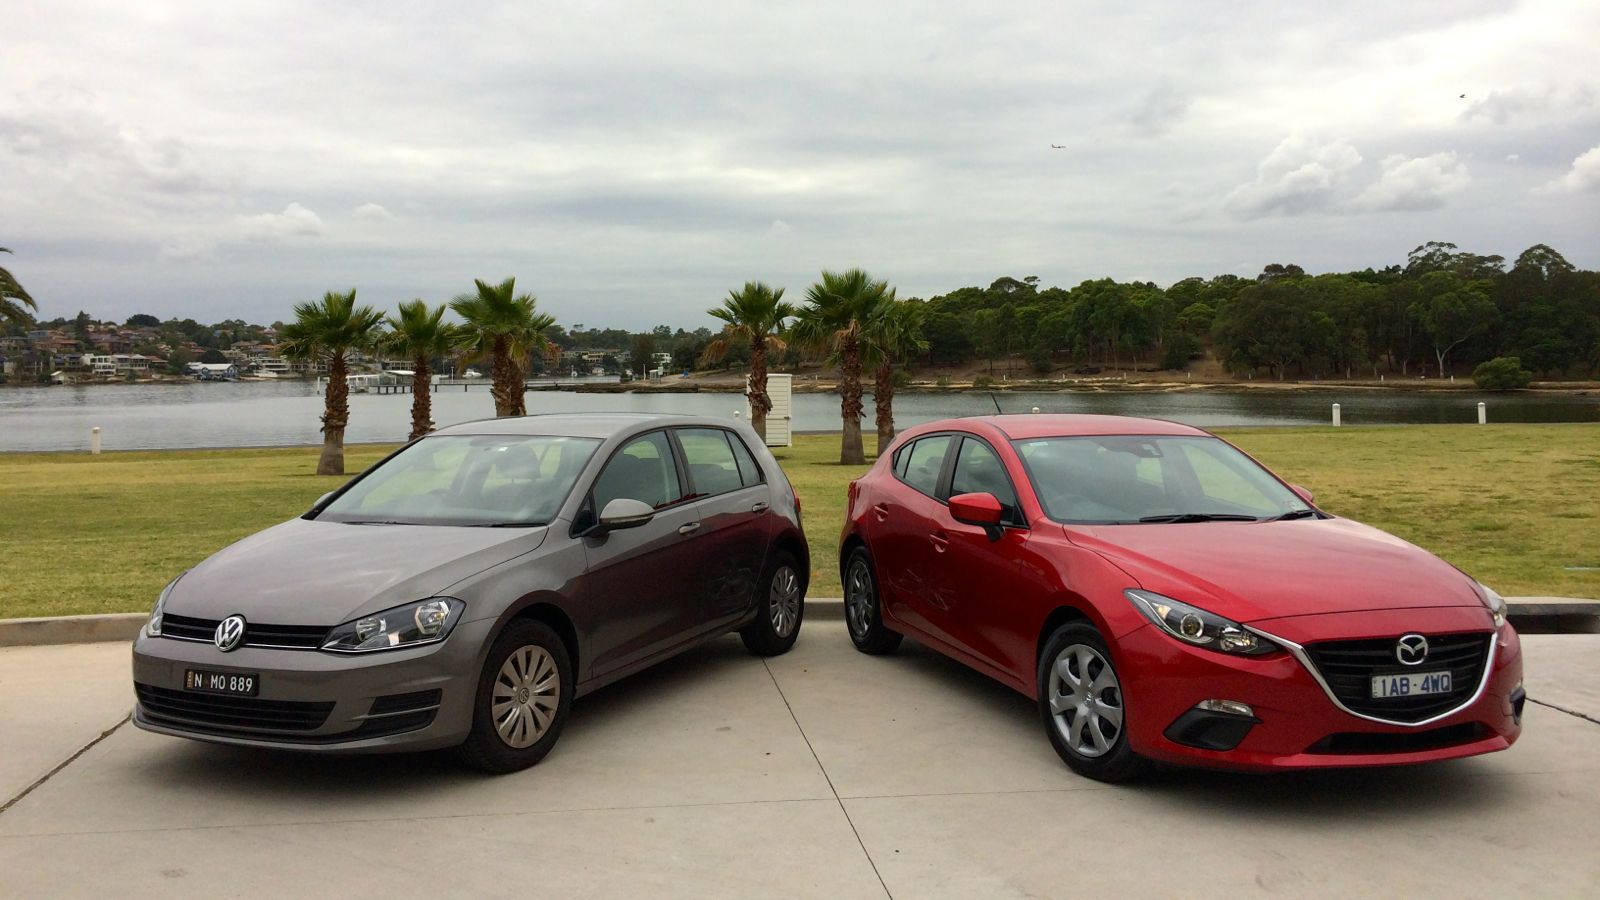 Mazda 3 v Volkswagen Golf Comparison Review Photos (1